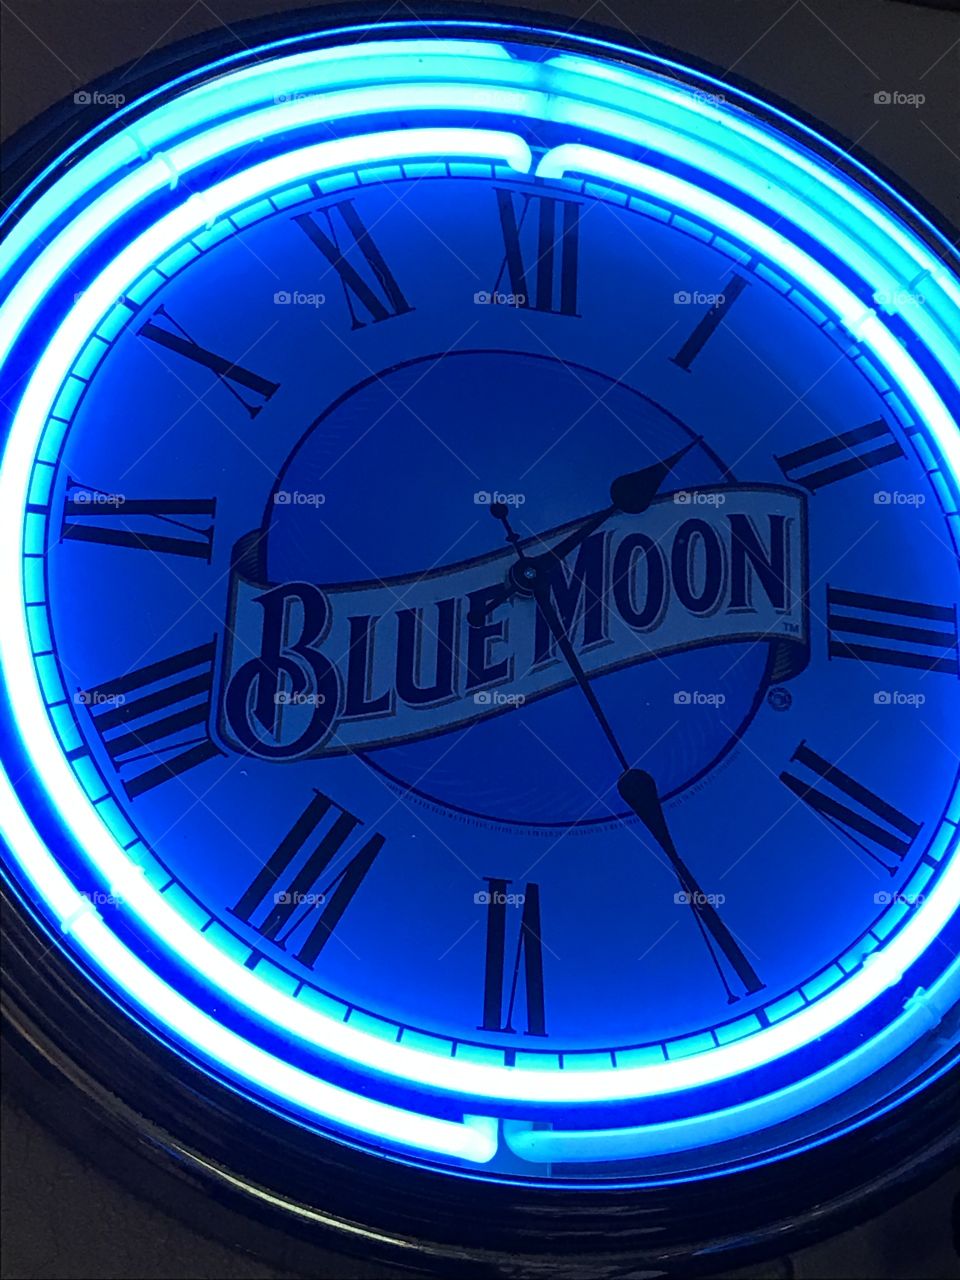 BLUE MOON neon wall clock